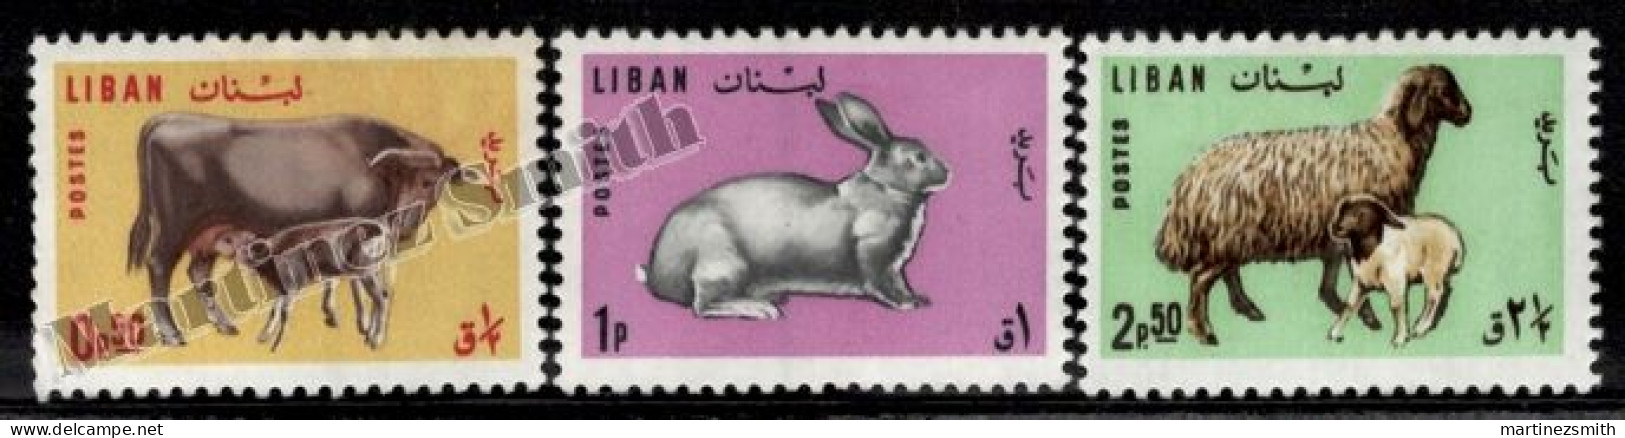 Liban 1965 Yvert 256-58, Fauna, Livestock, Farm Animals  - MNH - Lebanon